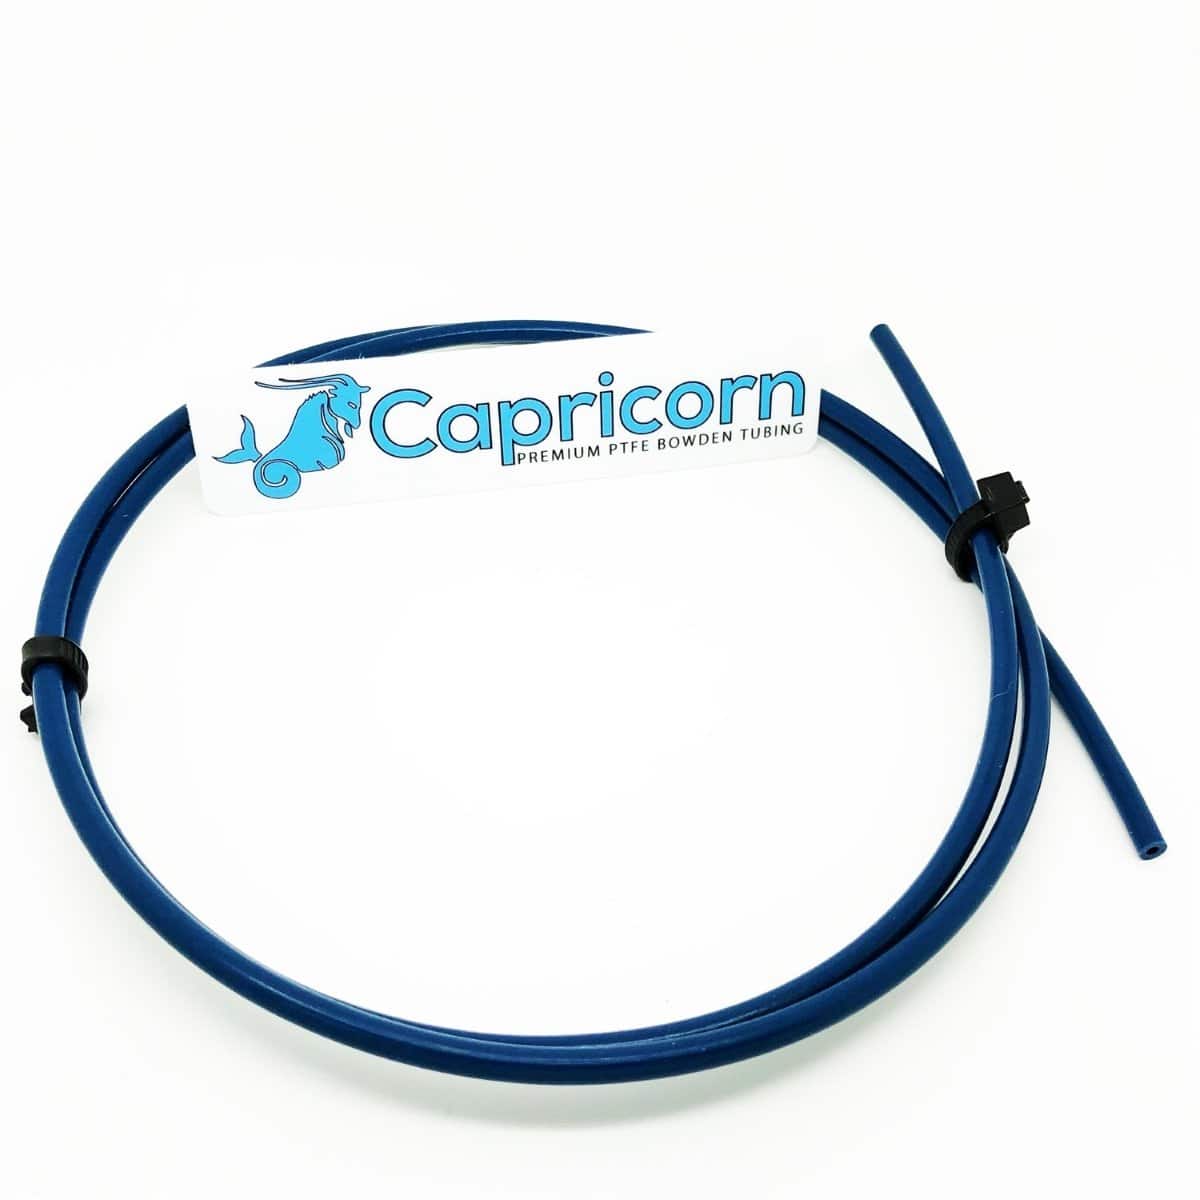 Køb Capricorn XS Series PTFE Bowden Tubing for 1.75mm Filament 3d printer - Pris 159.00 kr.